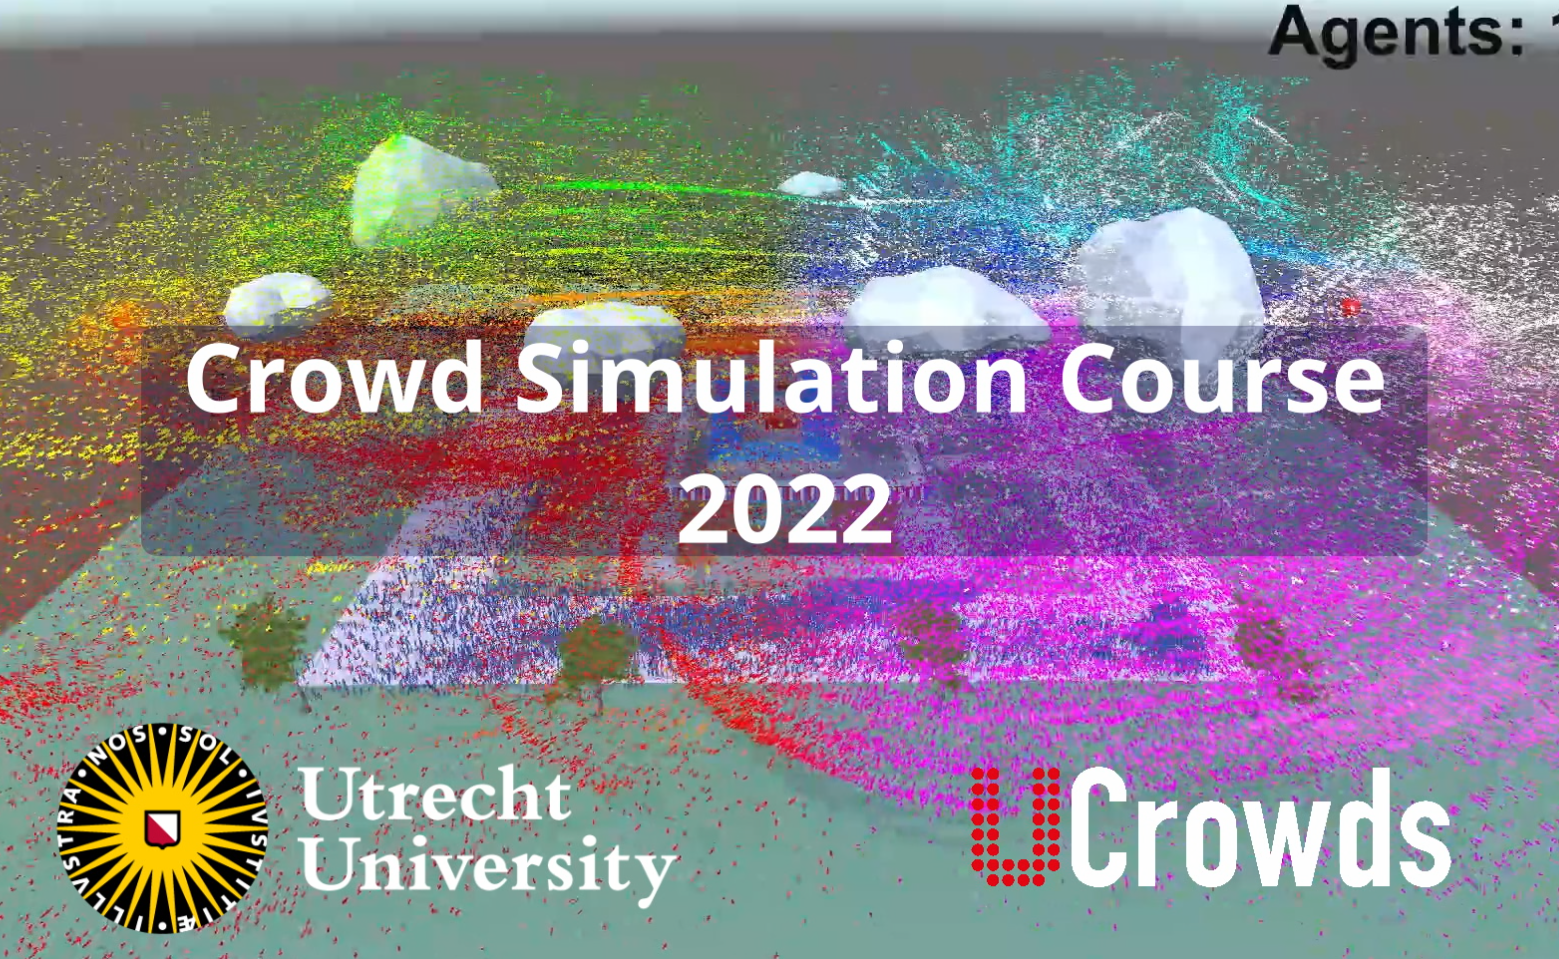 Crowd Simulation Course at Utrecht University image